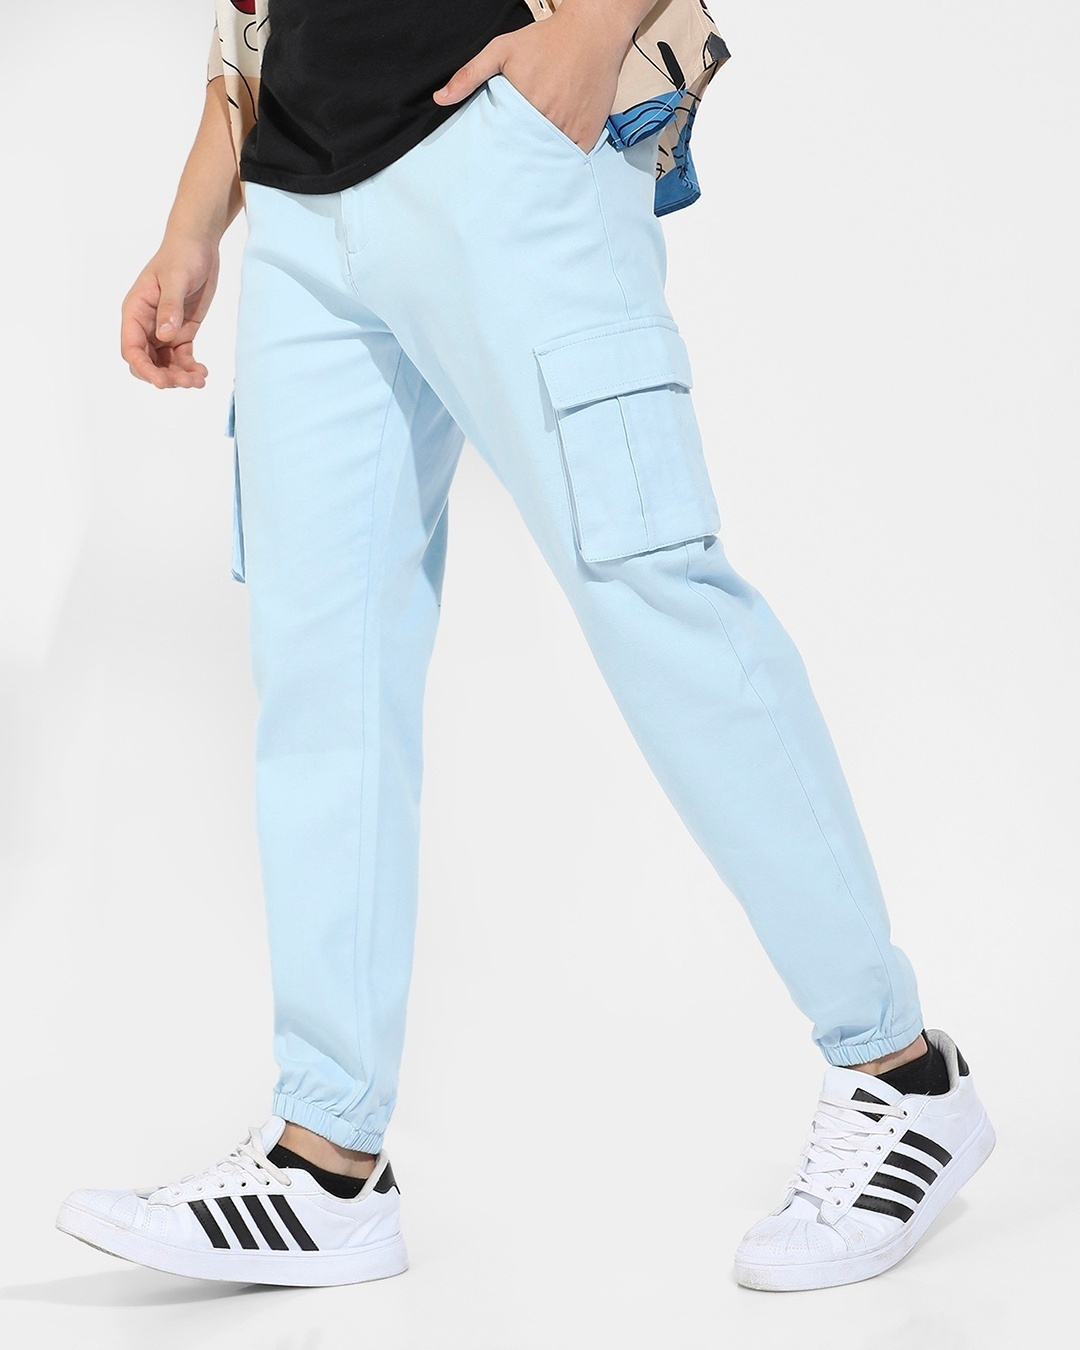 Zara Light Blue Cargo Pants Size 4 Blogger Favorite | Blue cargo pants,  High waisted cargo pants, Clothes design